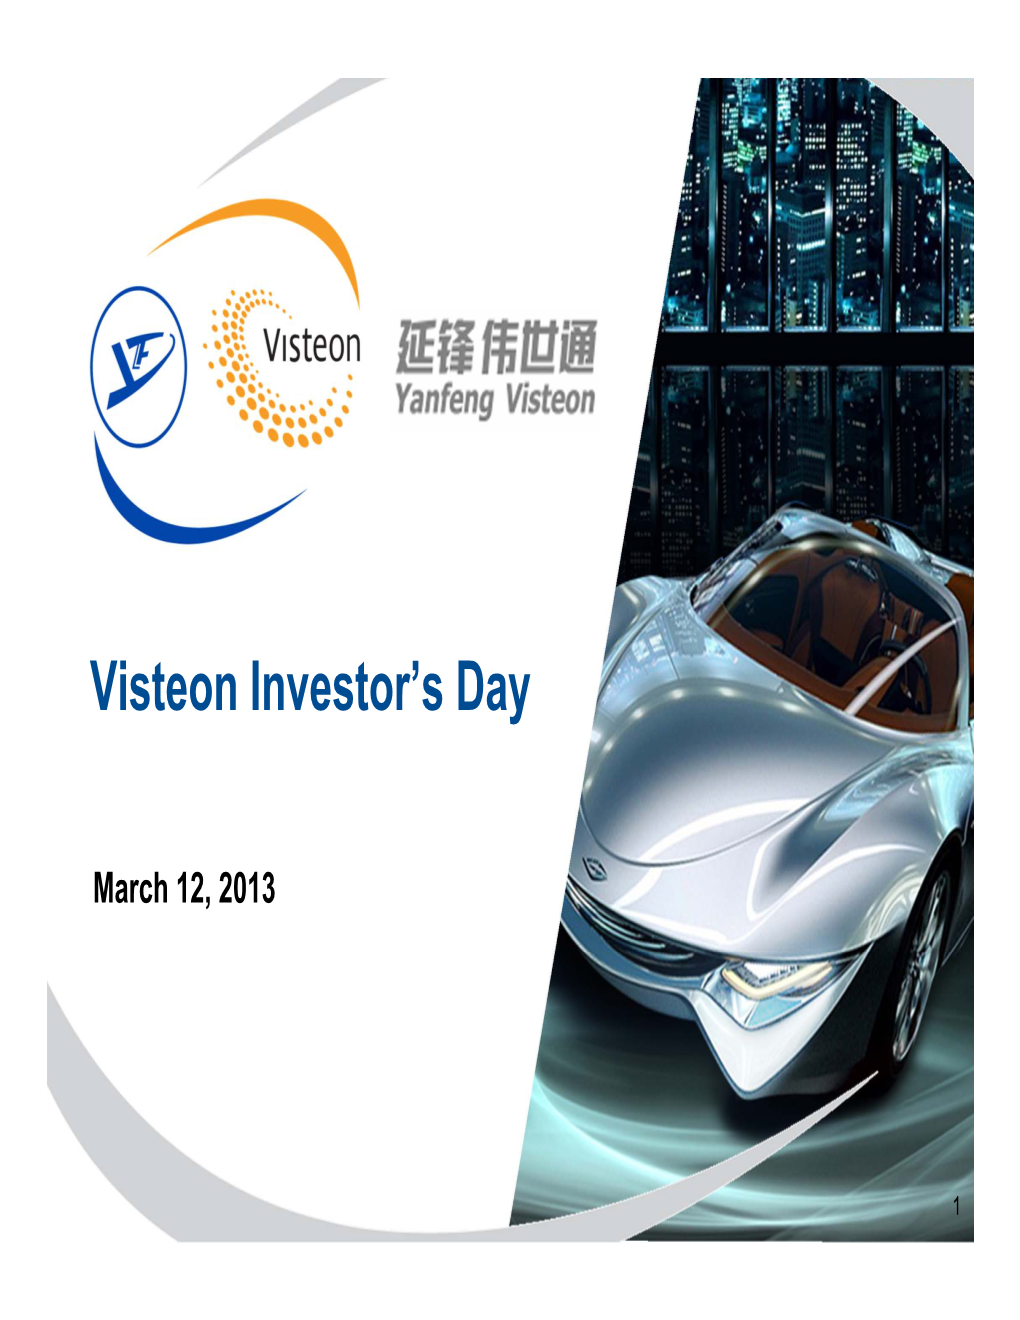 Visteon Investor's